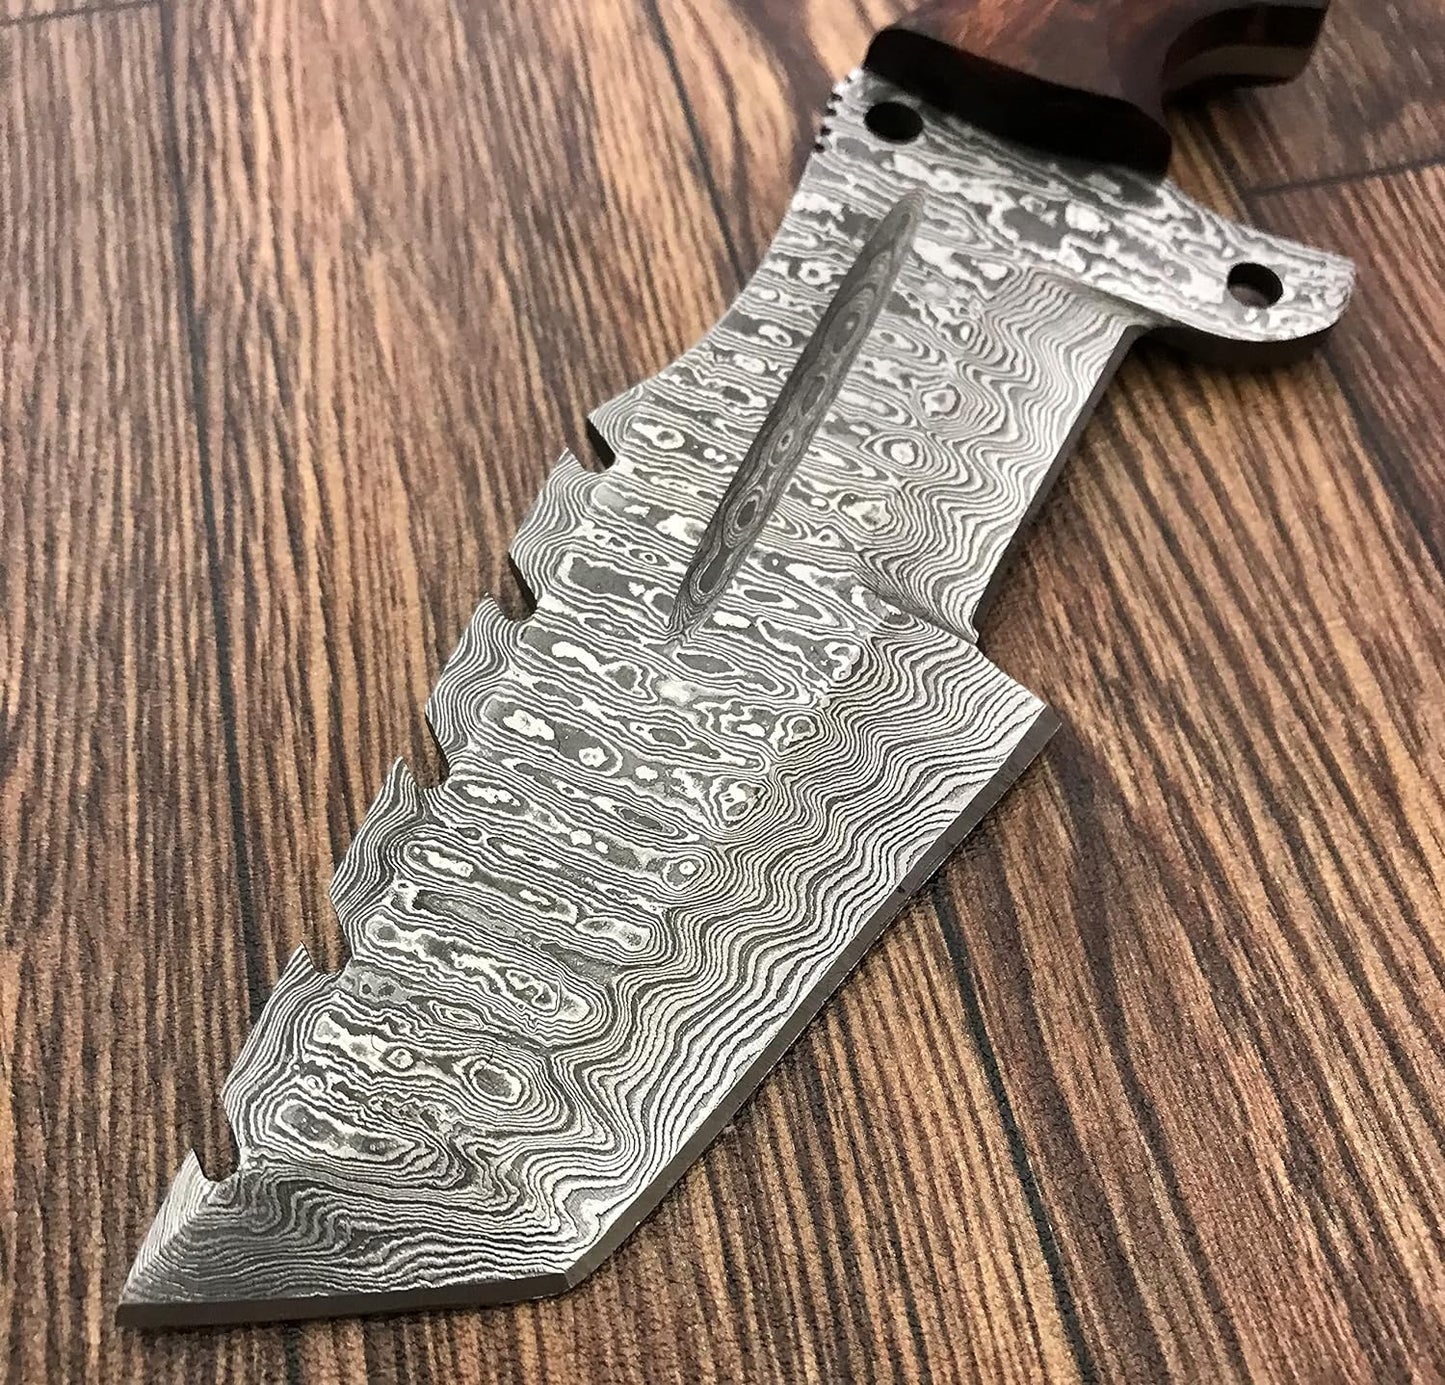 KD Damascus Steel Hunting Knife Walnut Wood Handle with Leather Sheath